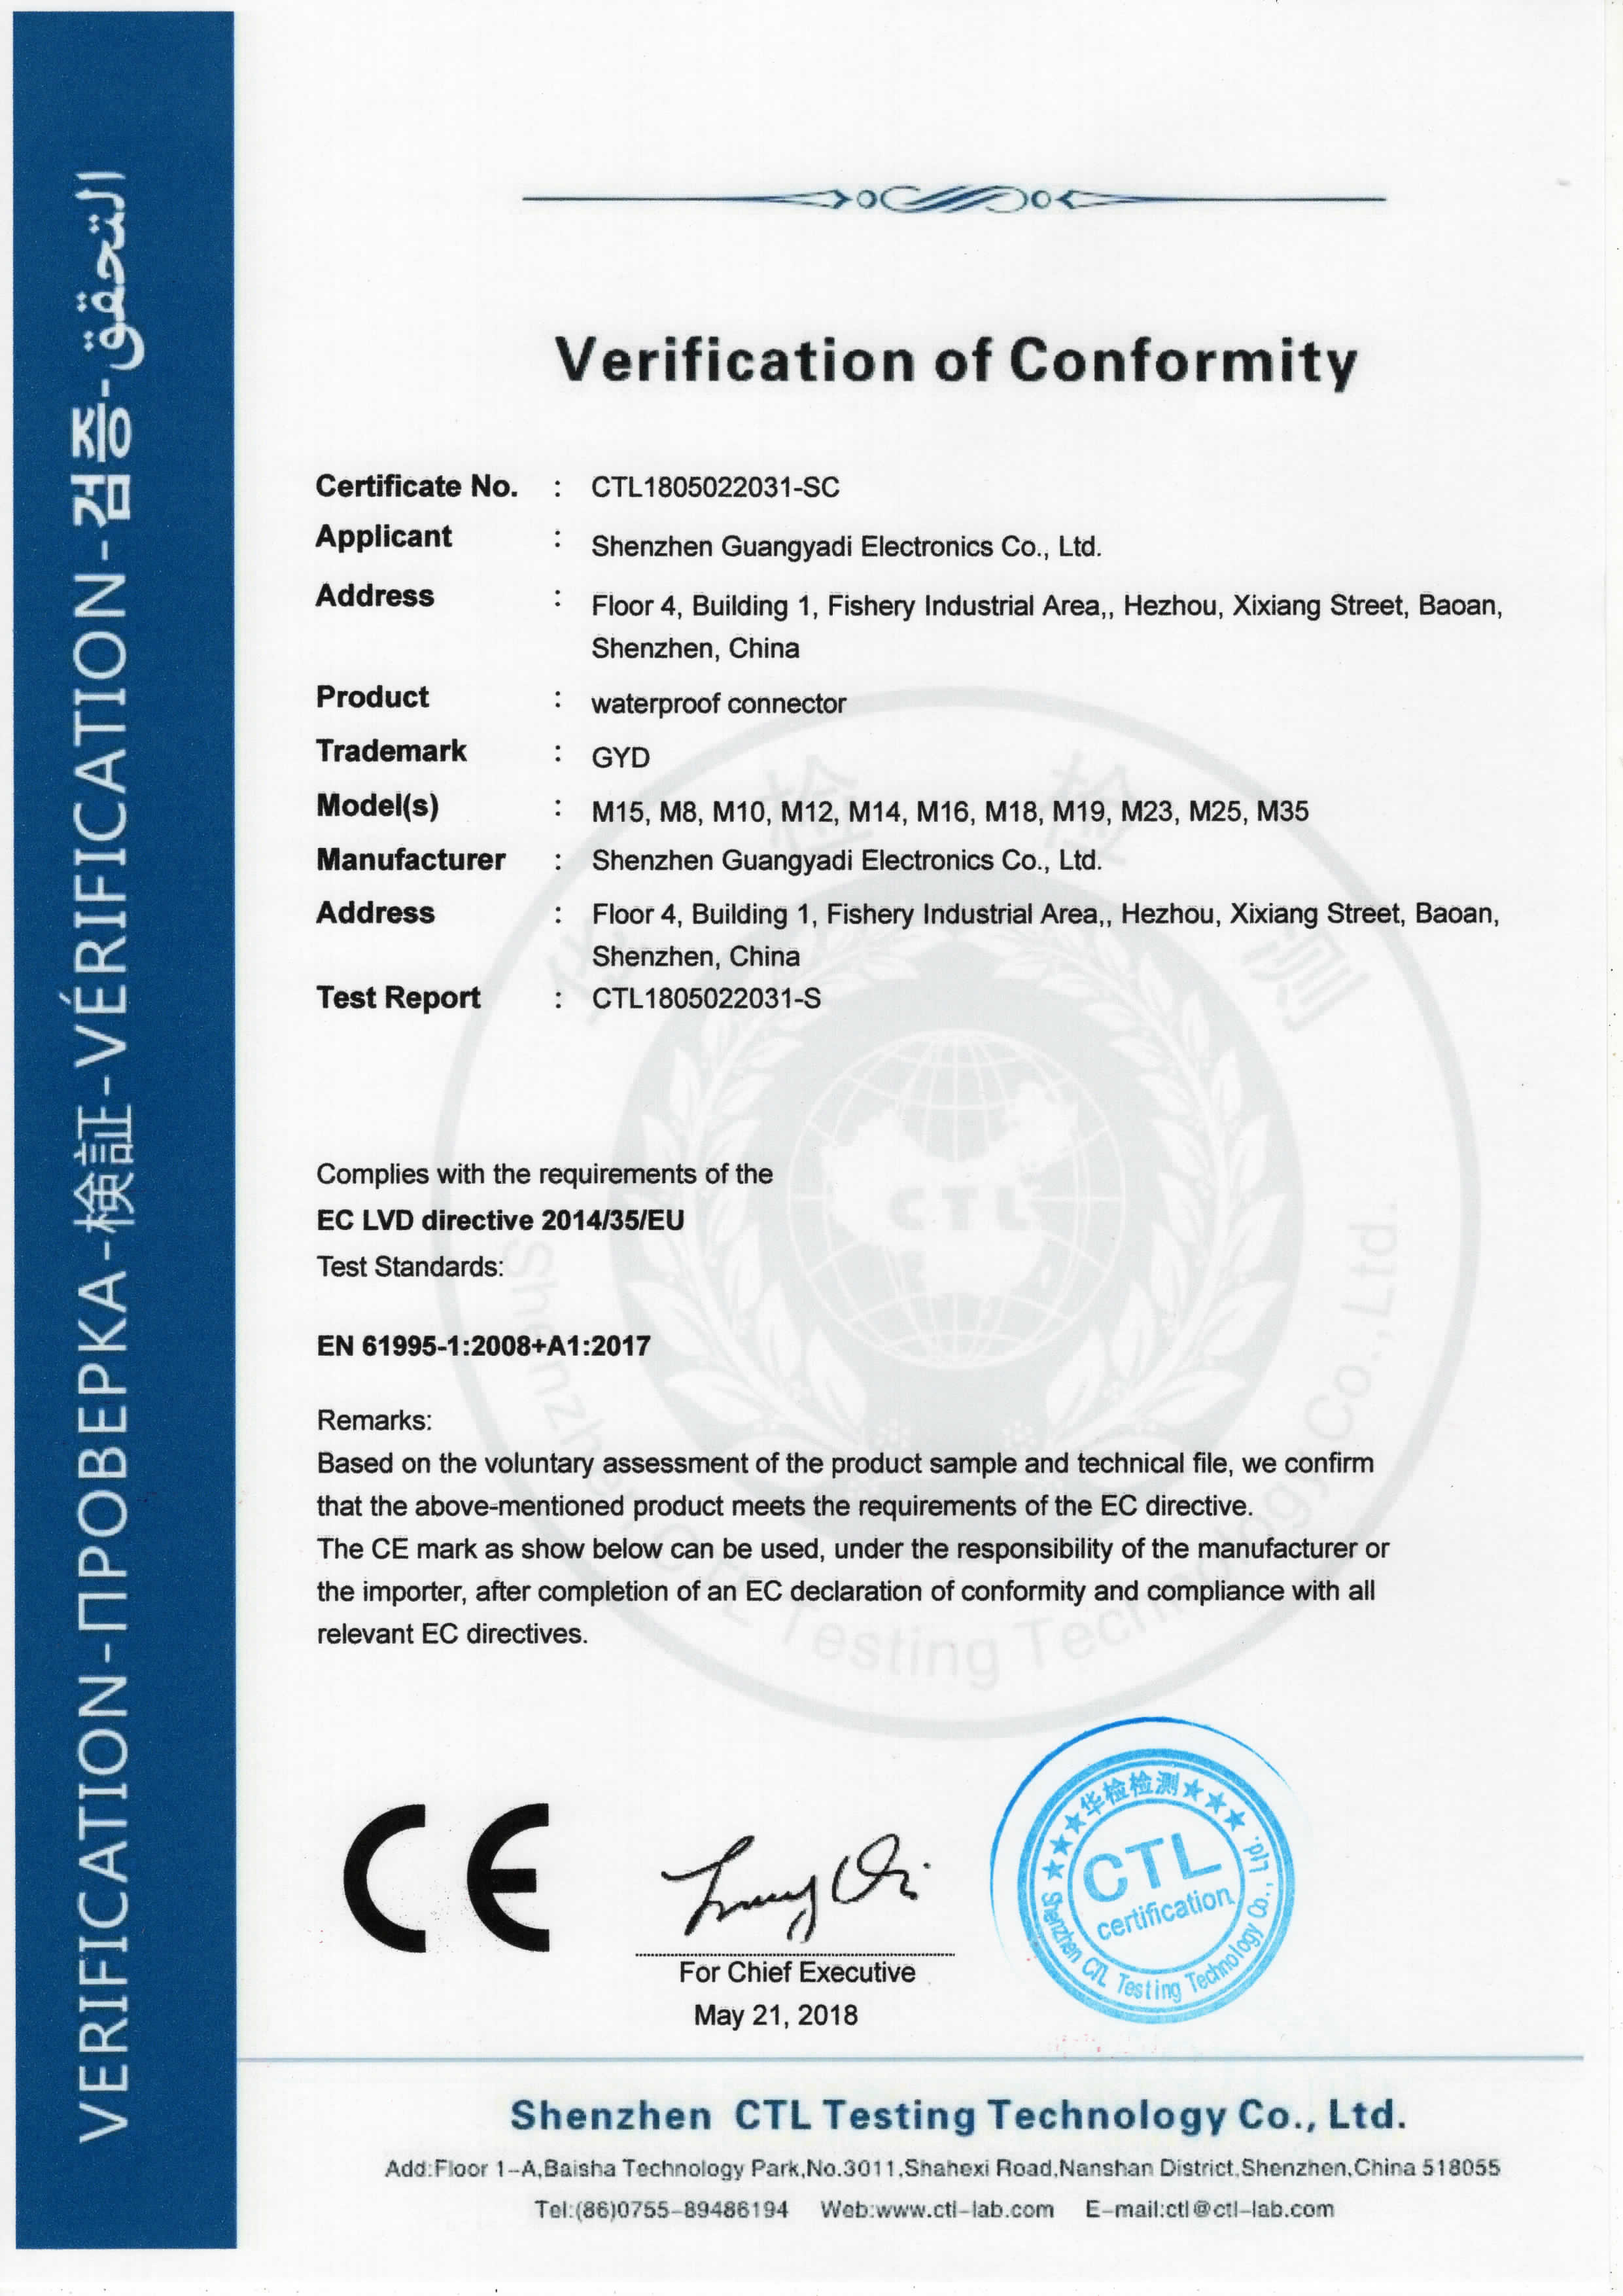 Shenzhen Bett Electronic Co., Ltd. Certifications